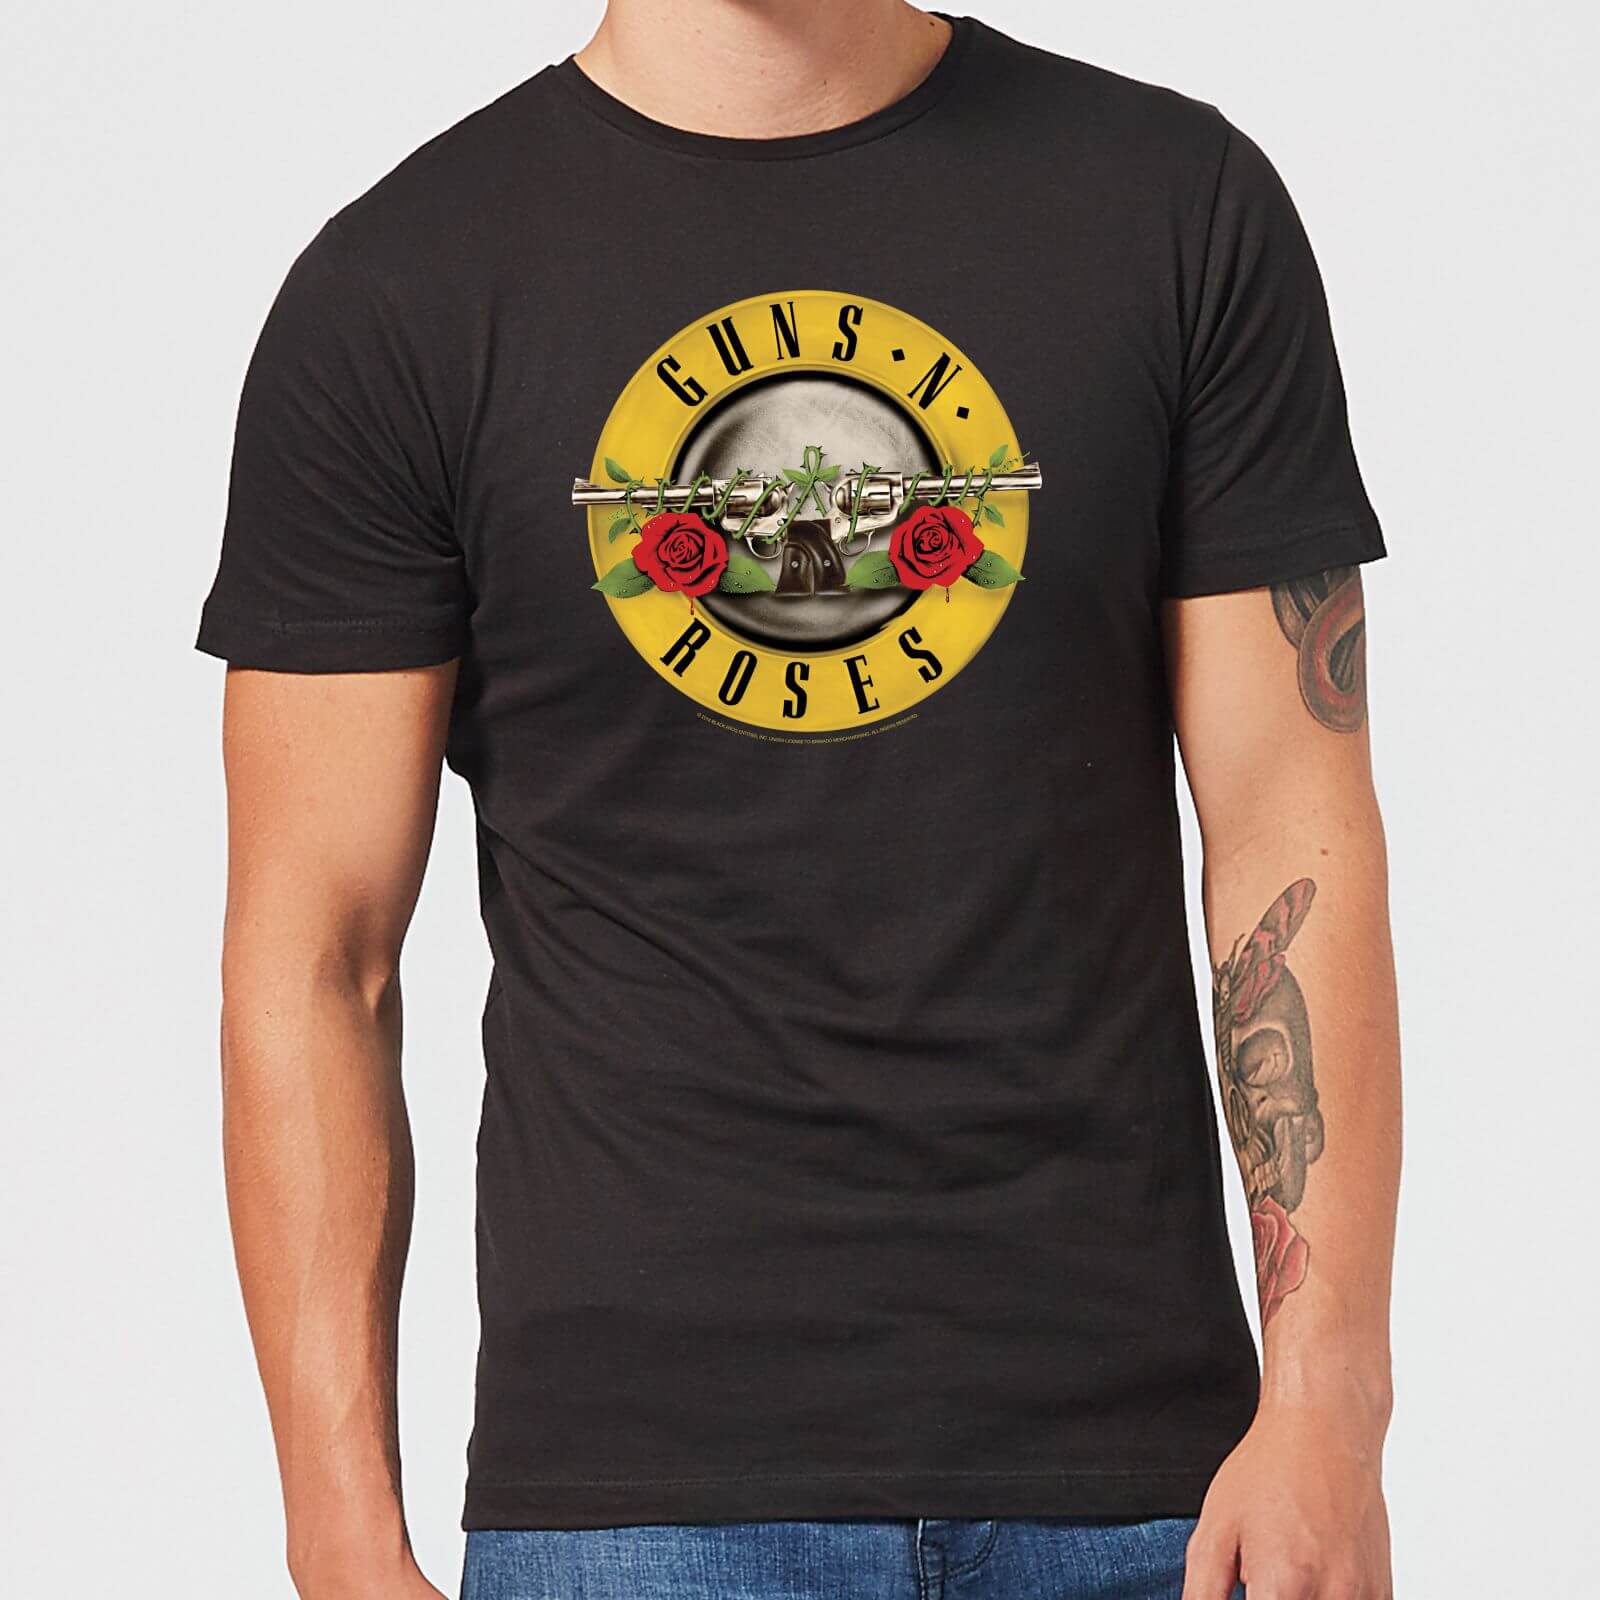 Thejagielskifamily: Guns N Roses Tour Shirts